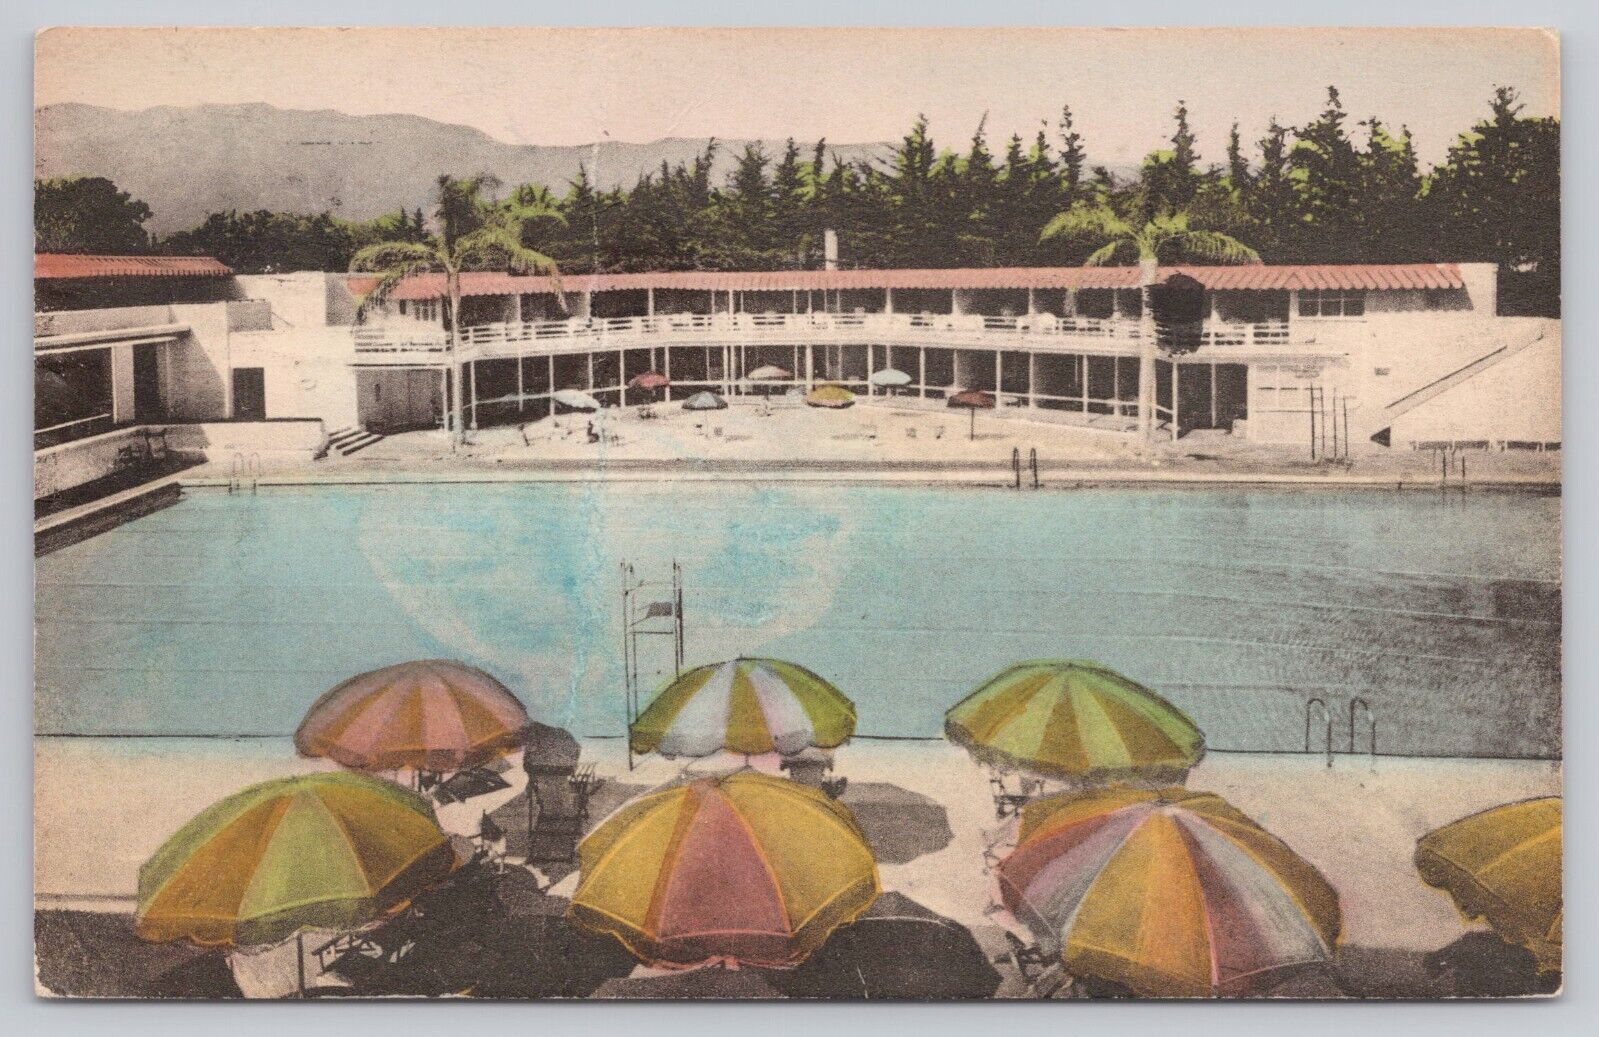 Santa Barbara California, Coral Casino Biltmore Hotel Pool, Vintage Postcard